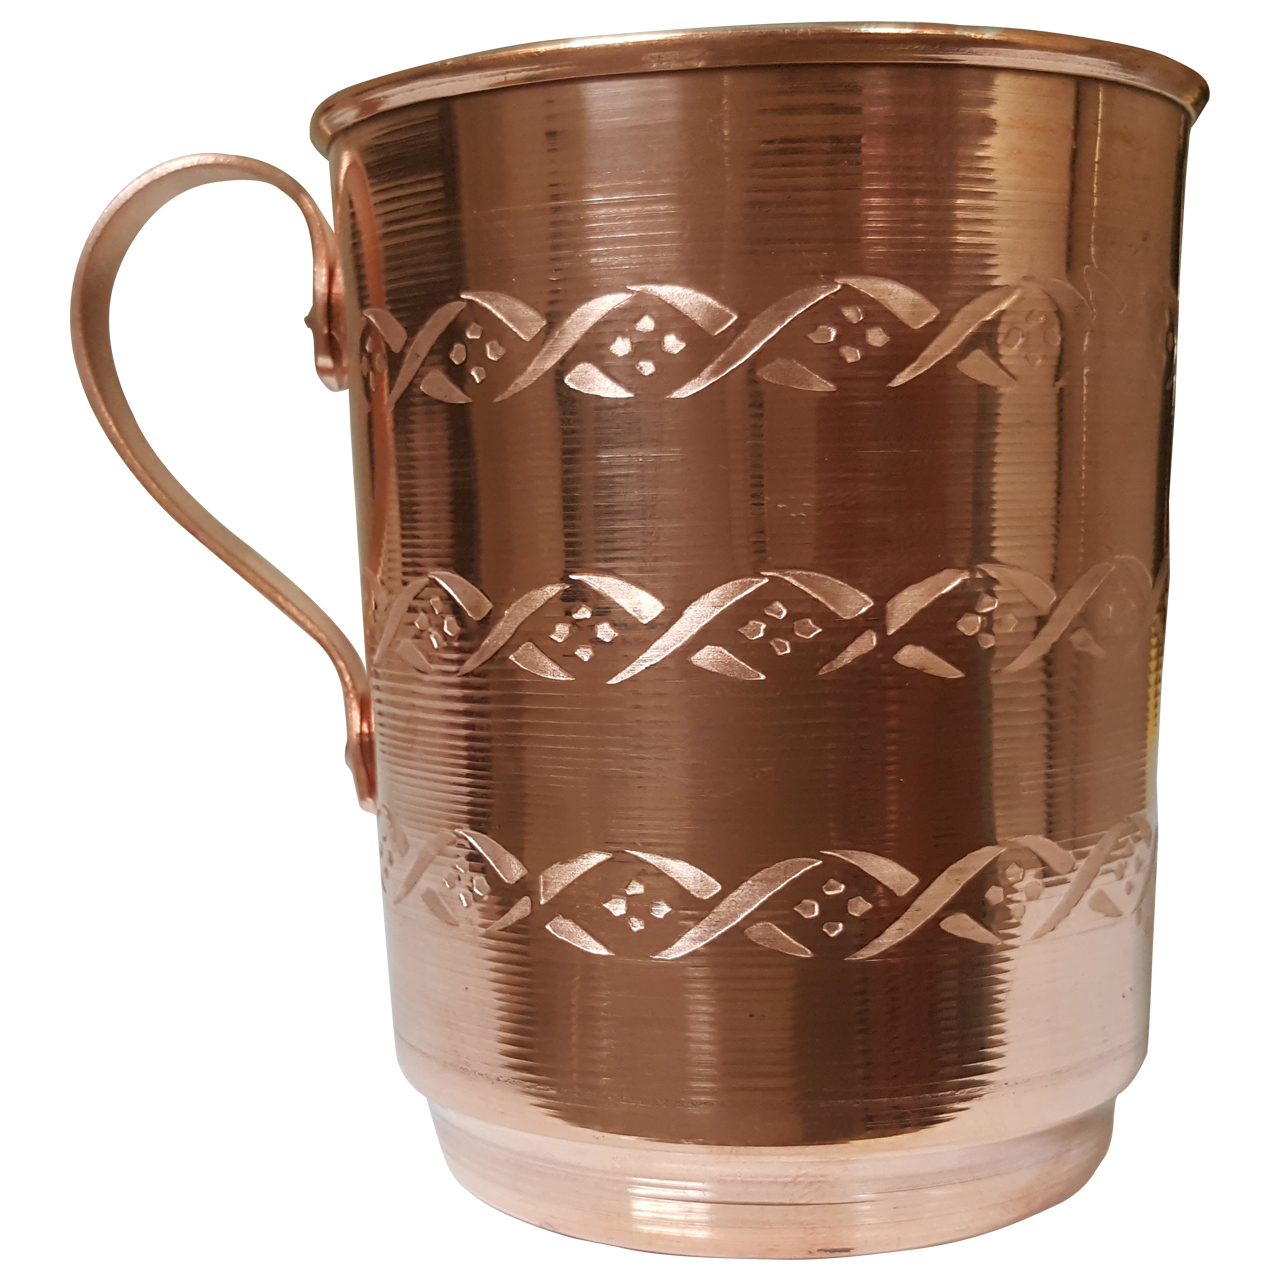 Jamal Abbasi brand copper glass, RASTEH Model, code ZH124